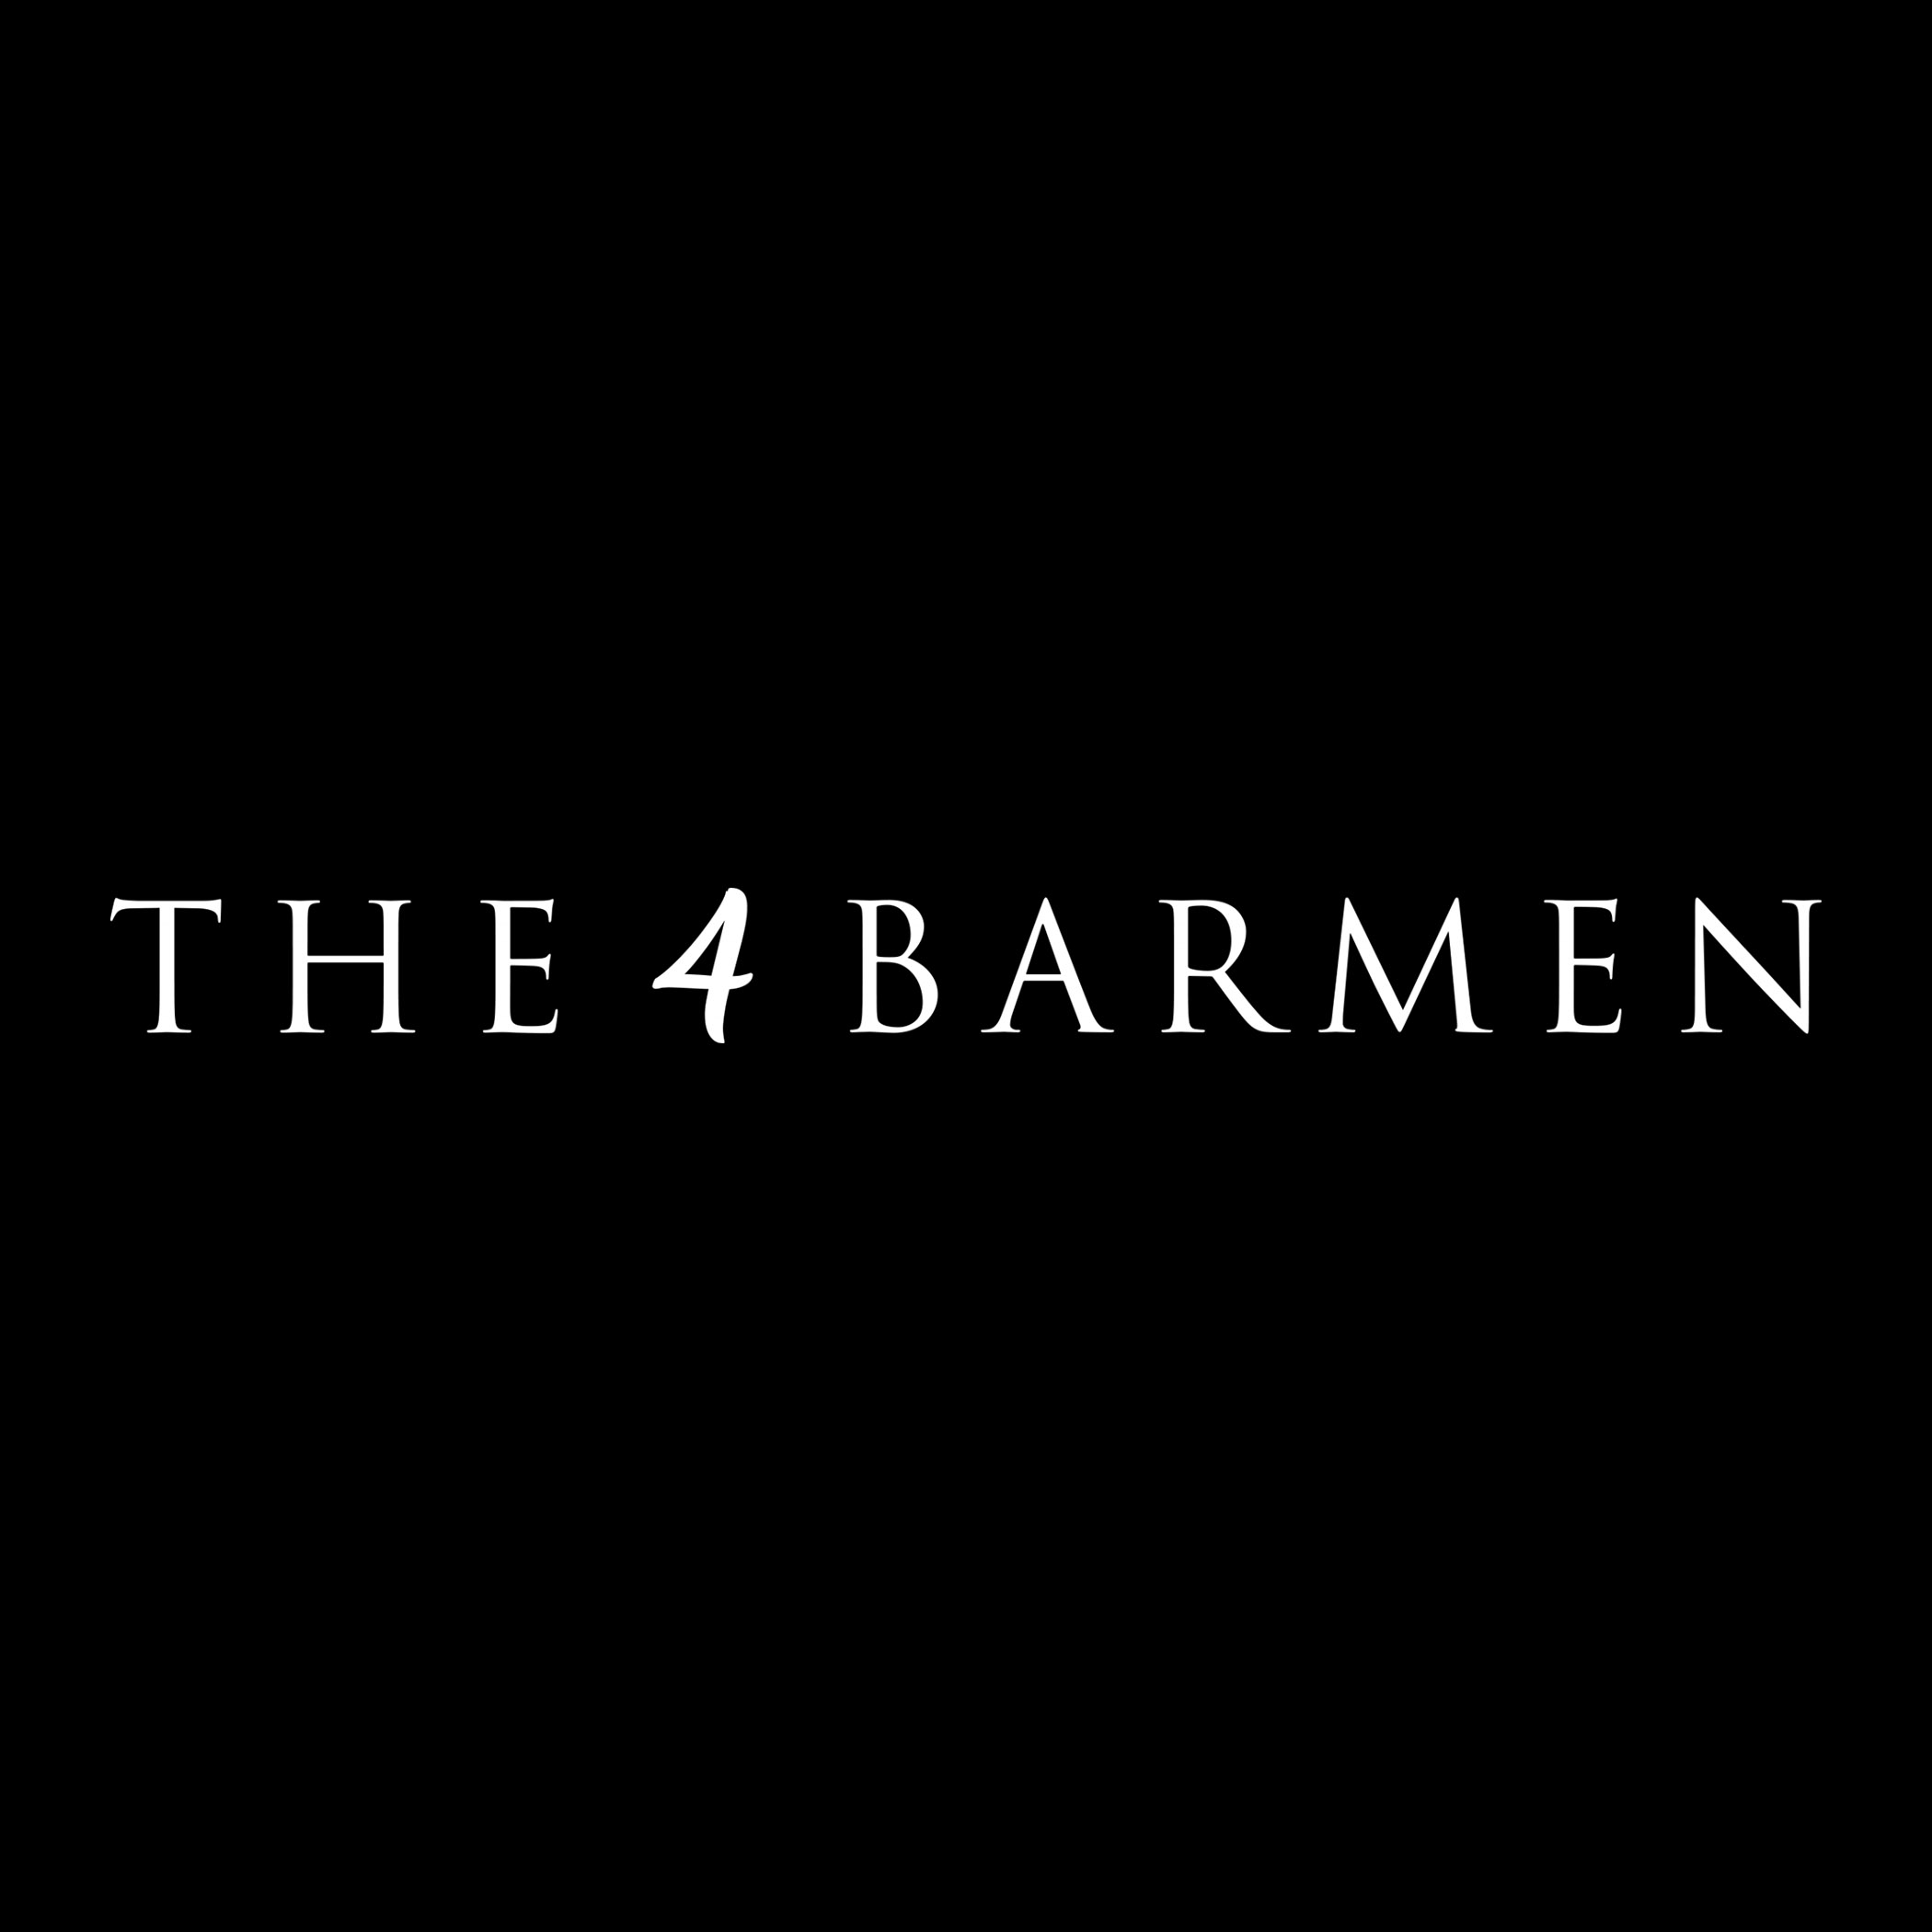 The 4 Barmen